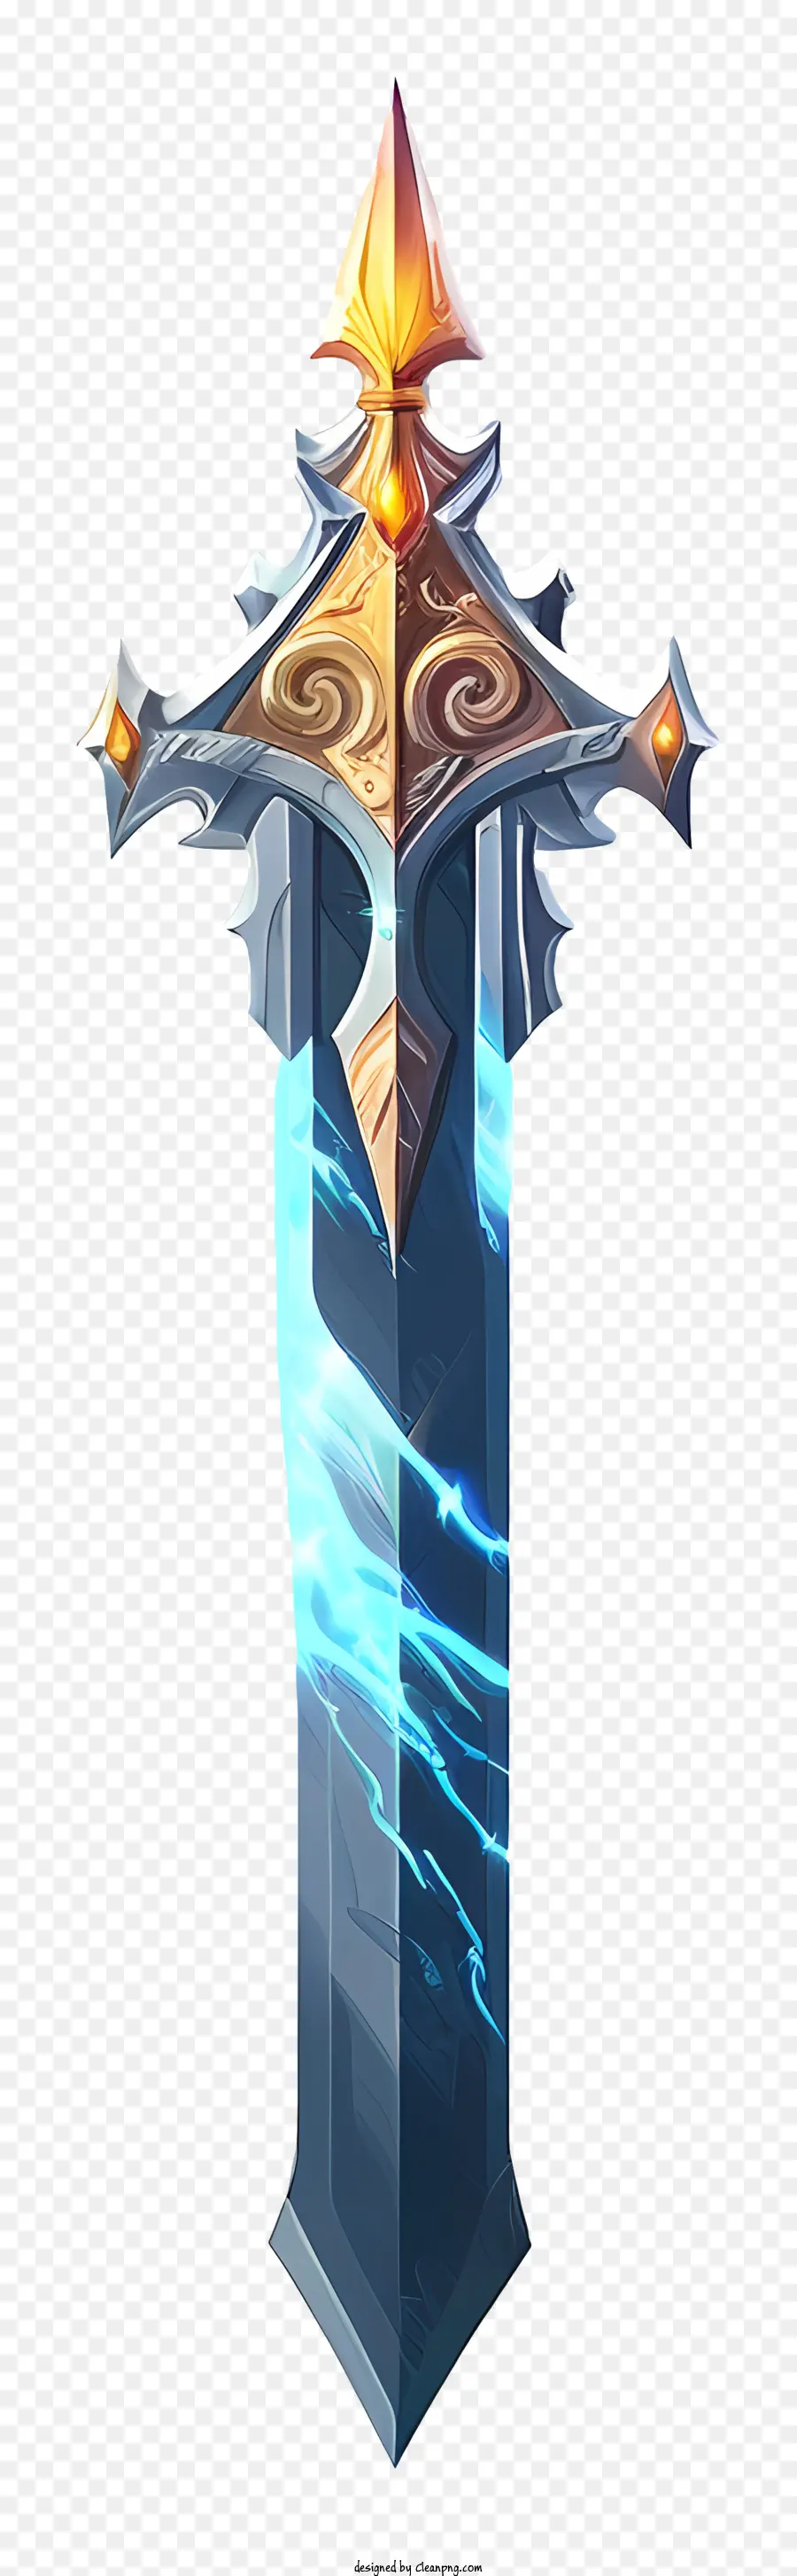 flat diamond sword sword glowing light metal intricate designs